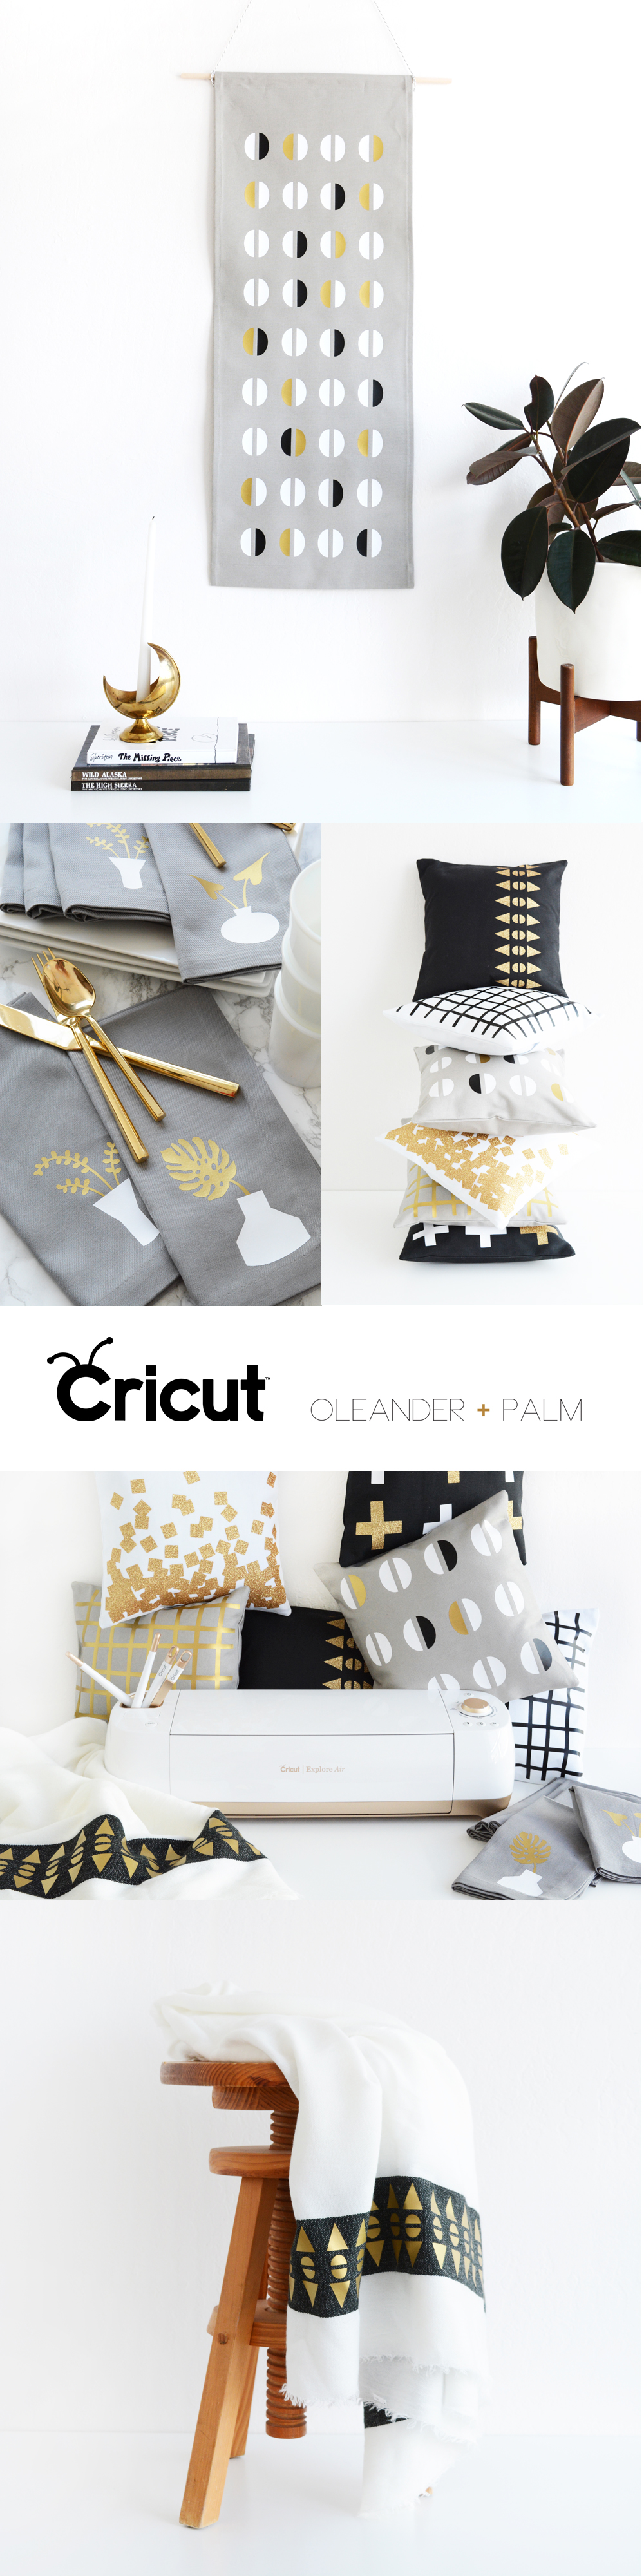 Cricut Gold Machine for Jo Ann Fabrics - Oleander + Palm Designs